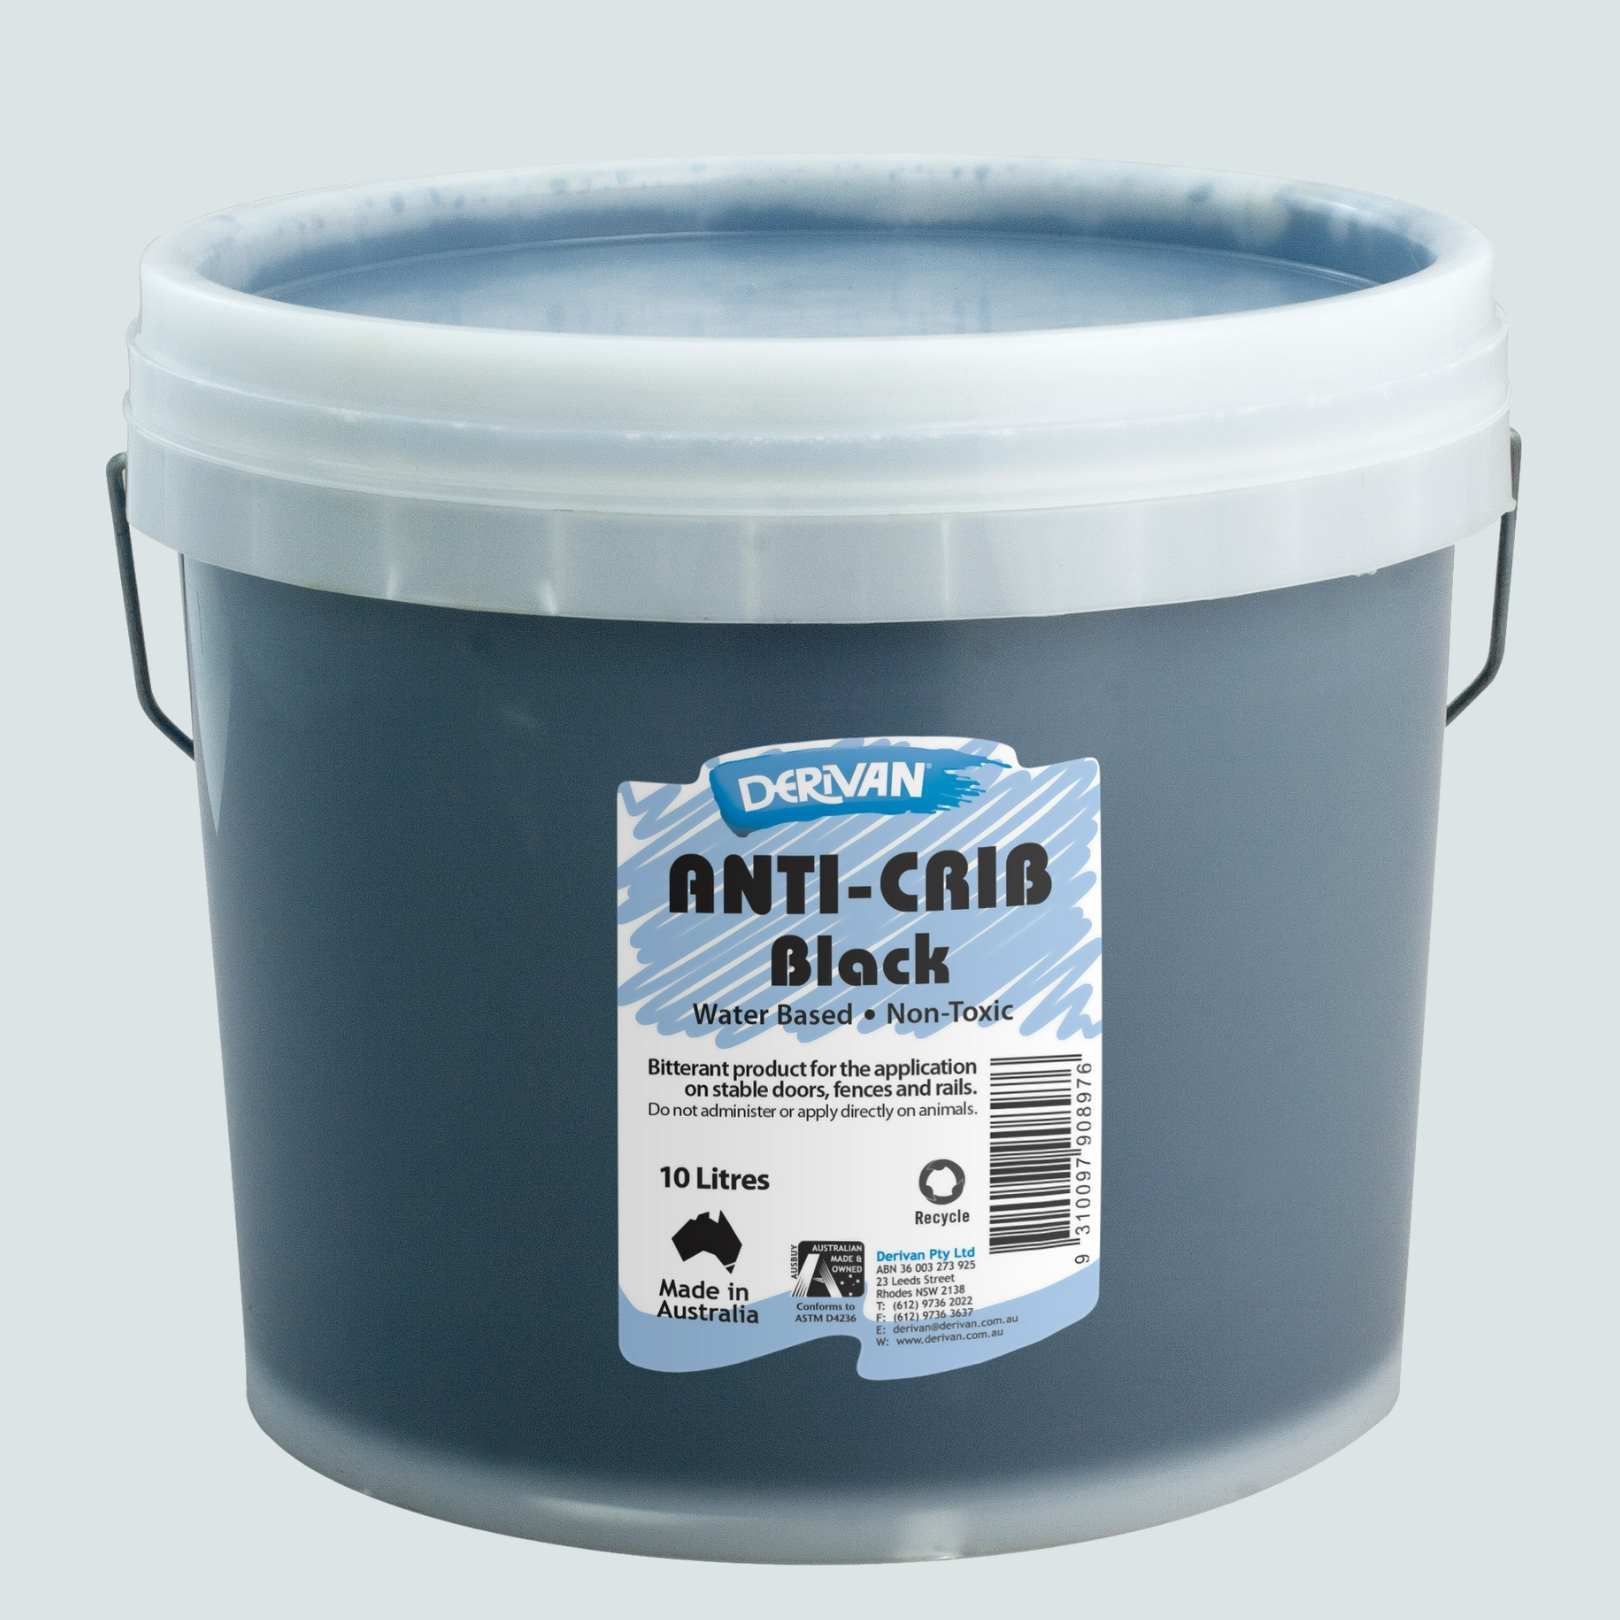 Anti-Crib black product image